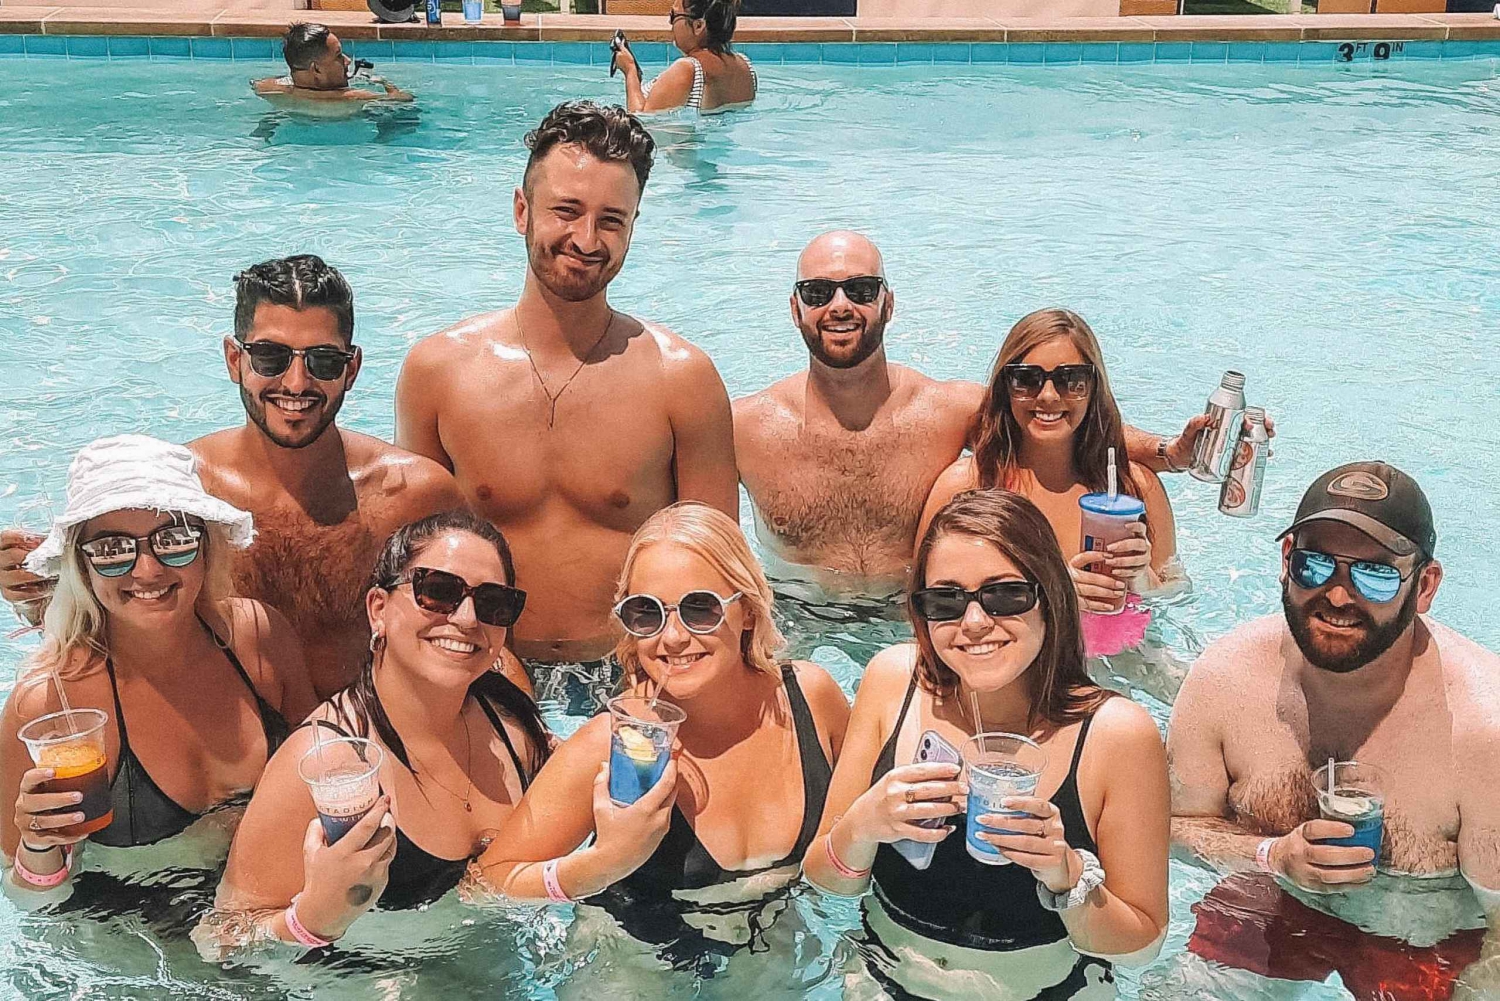 Las Vegas: Pool Crawl med gratis drinks på partybussen